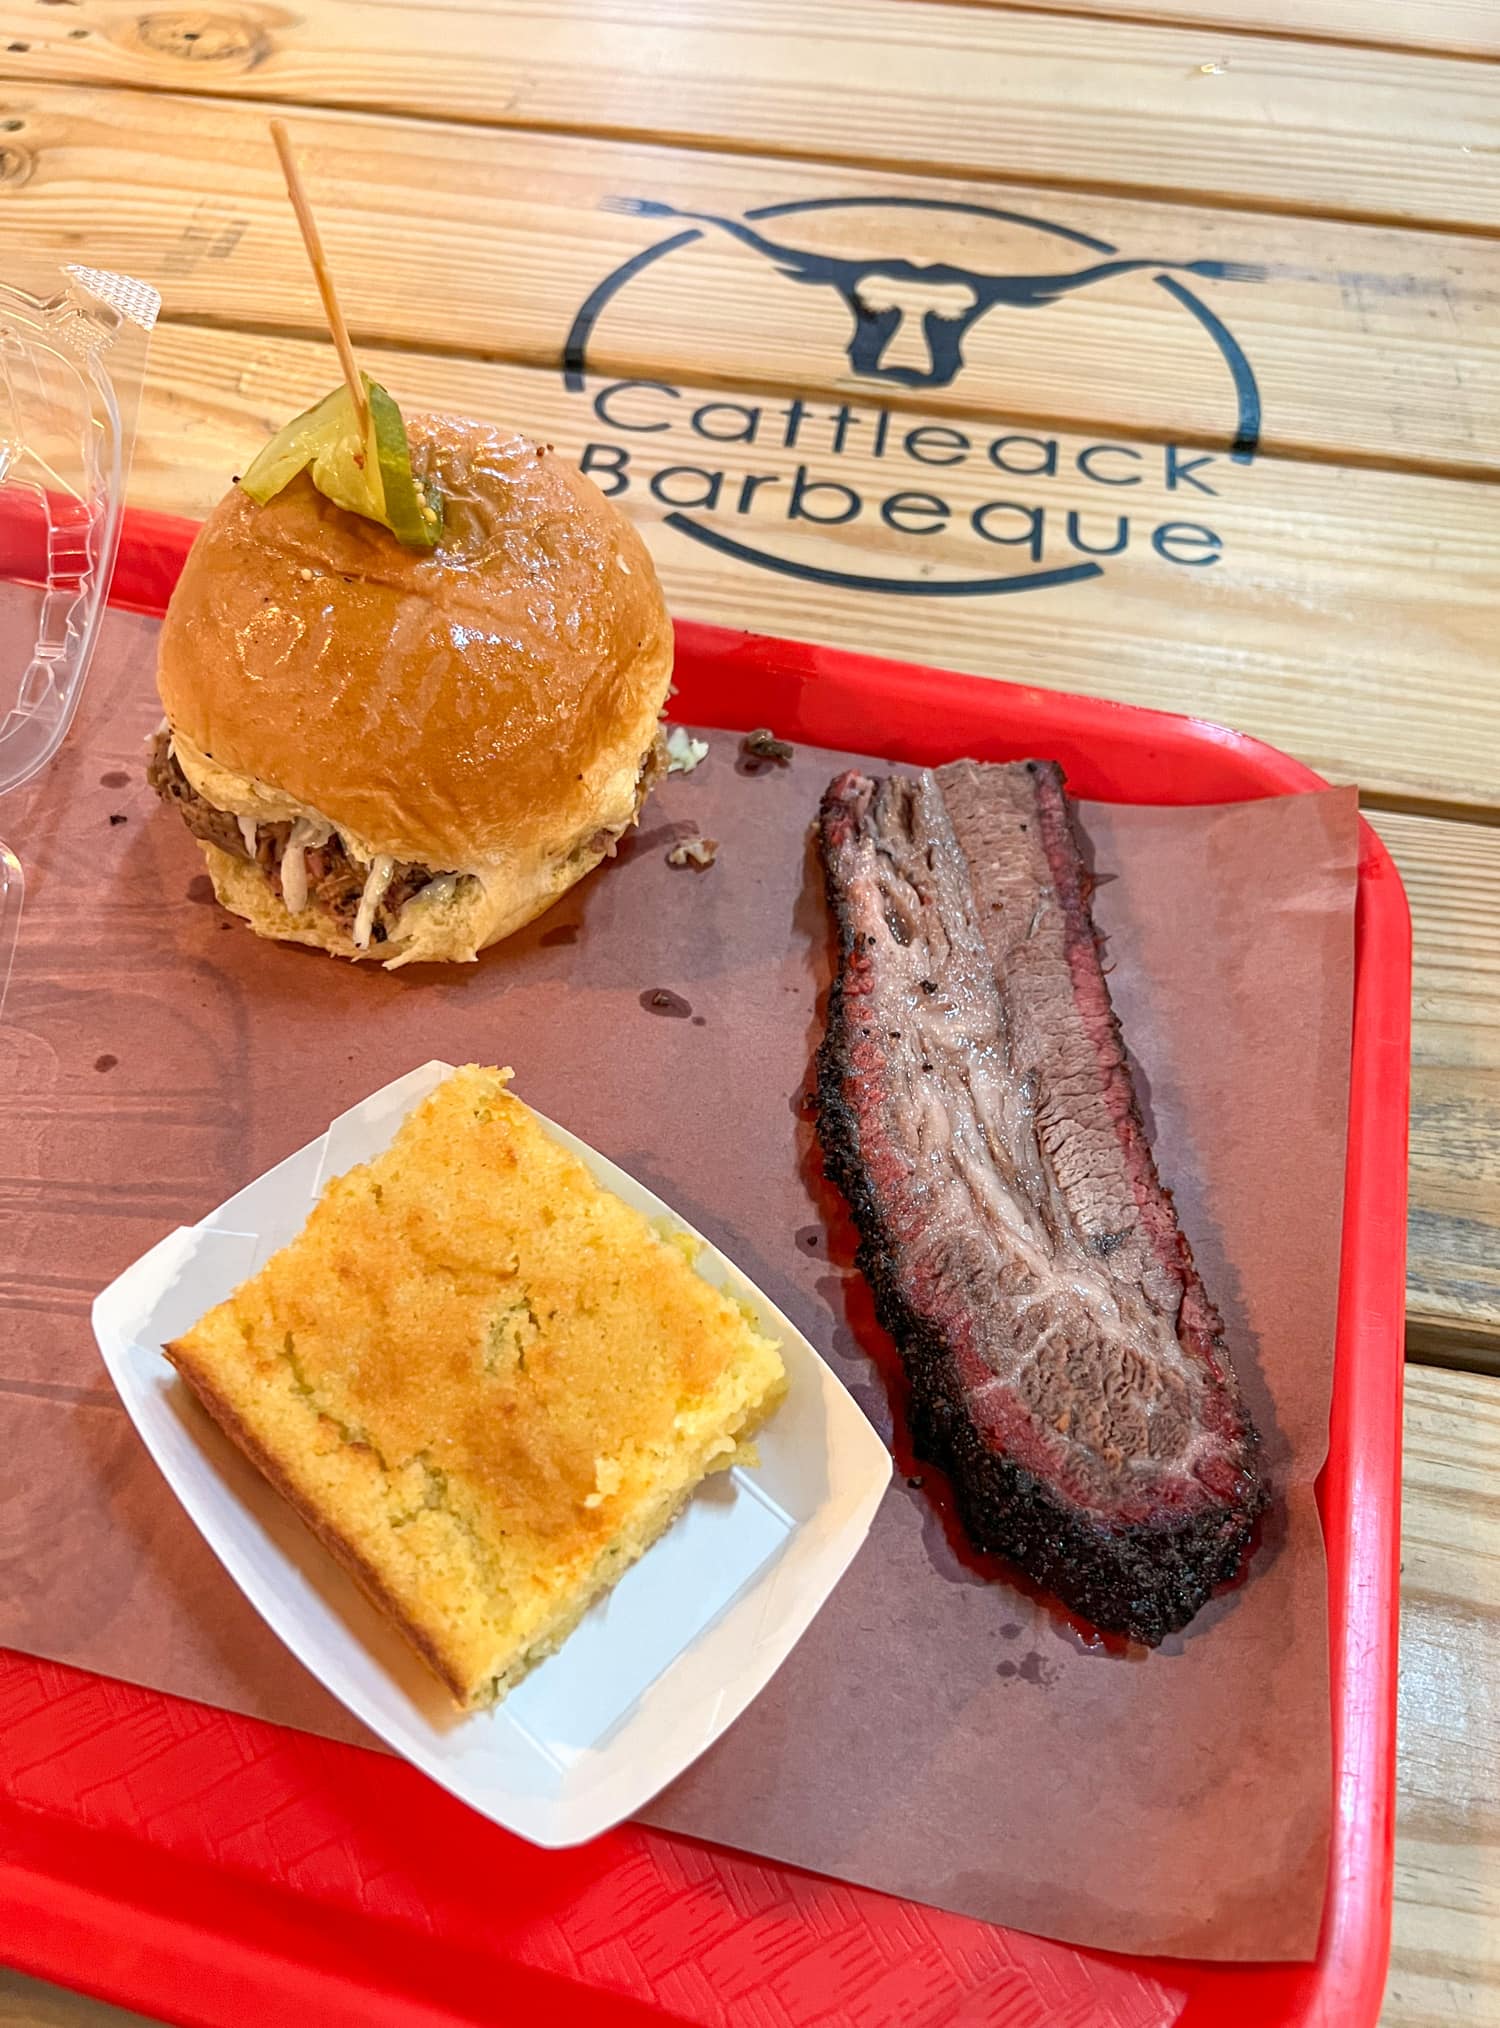 Brisket, pork sandwich, and cornbread at Cattleack Barbeque, one of the best restaurants in the Dallas metroplex